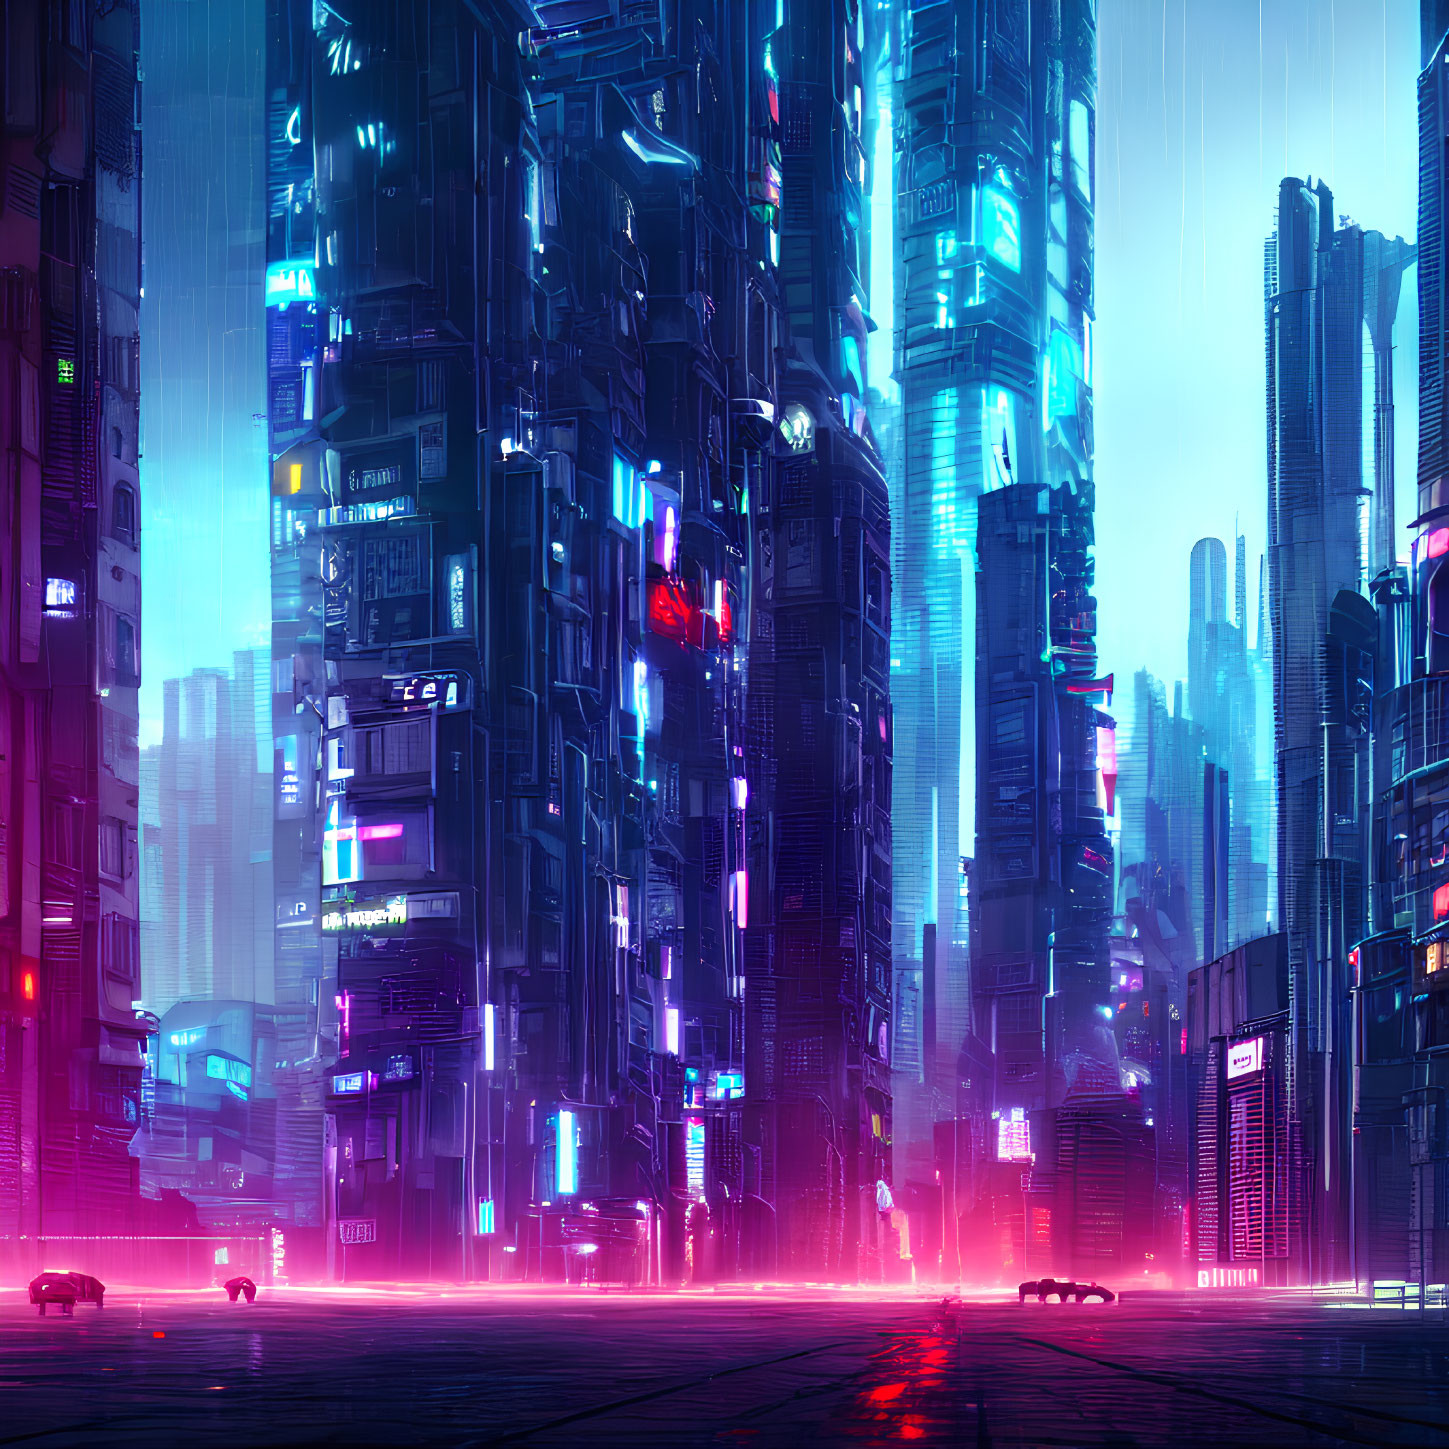 Cyberpunk city on a rainy Day